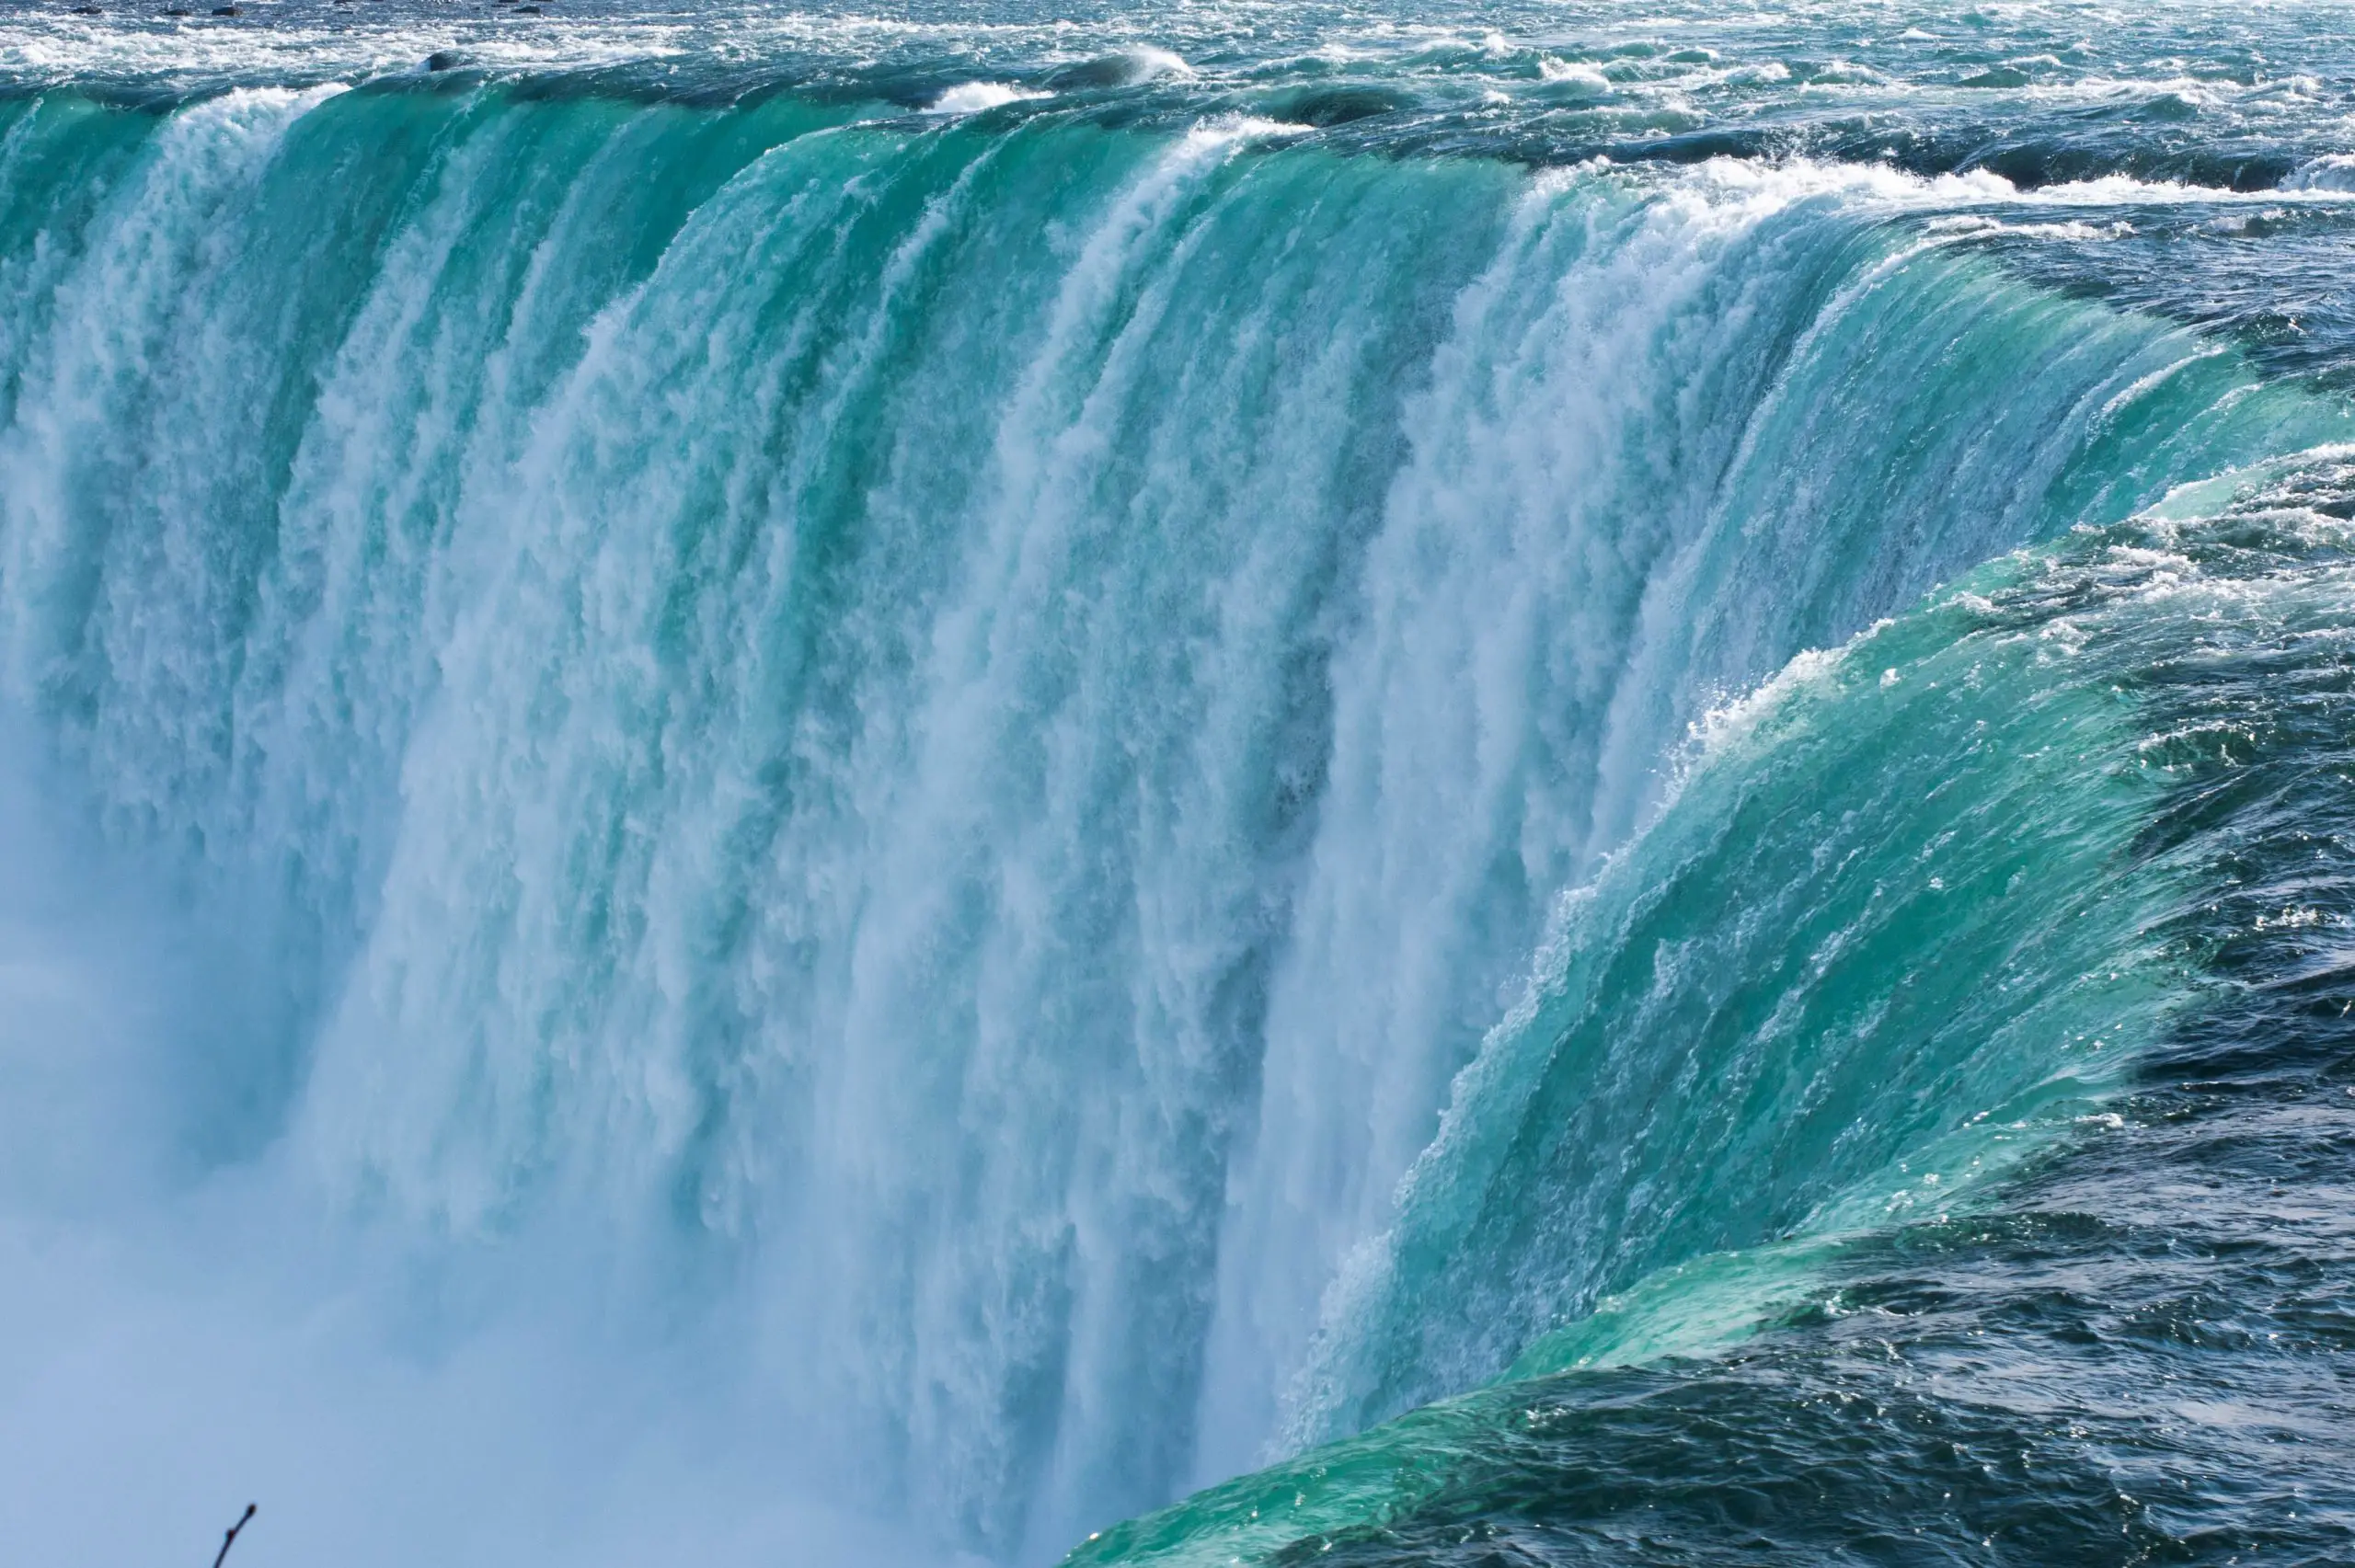 Visit Niagara Falls - the falls